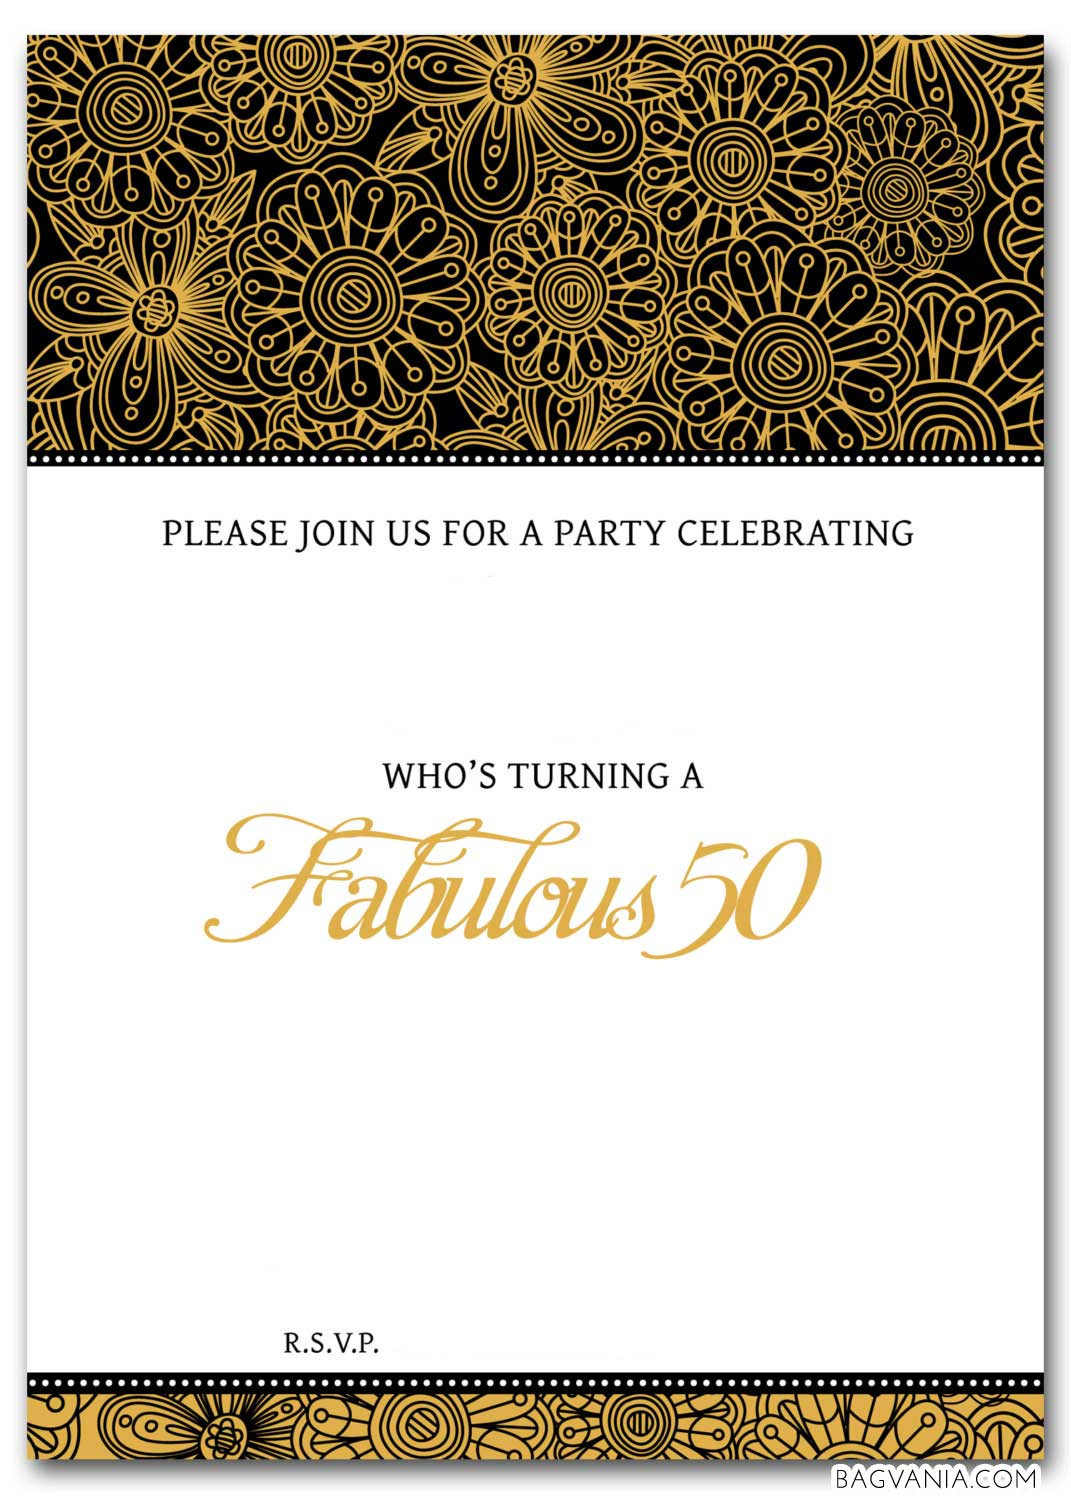 Free Birthday Invitation Template
 FREE 50th Birthday Party Invitations Wording – FREE